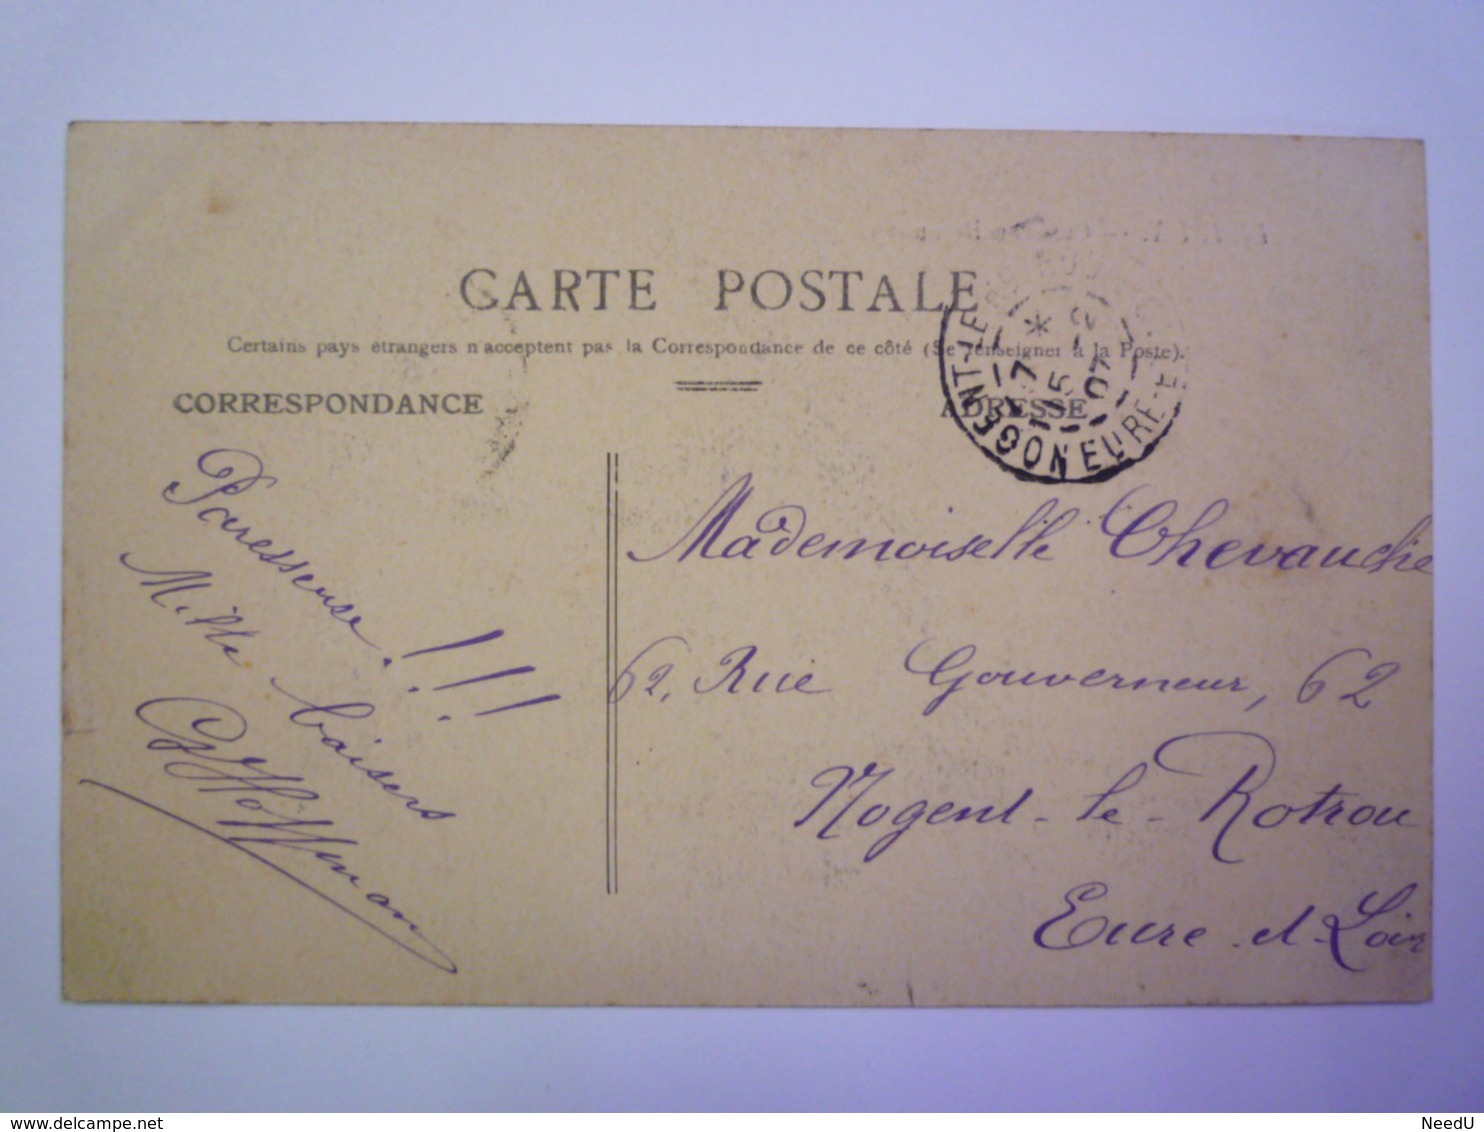 GP 2019 - 1707  LISIEUX  (Calvados)  :  CASERNE DELANAY   1907   XXX - Lisieux